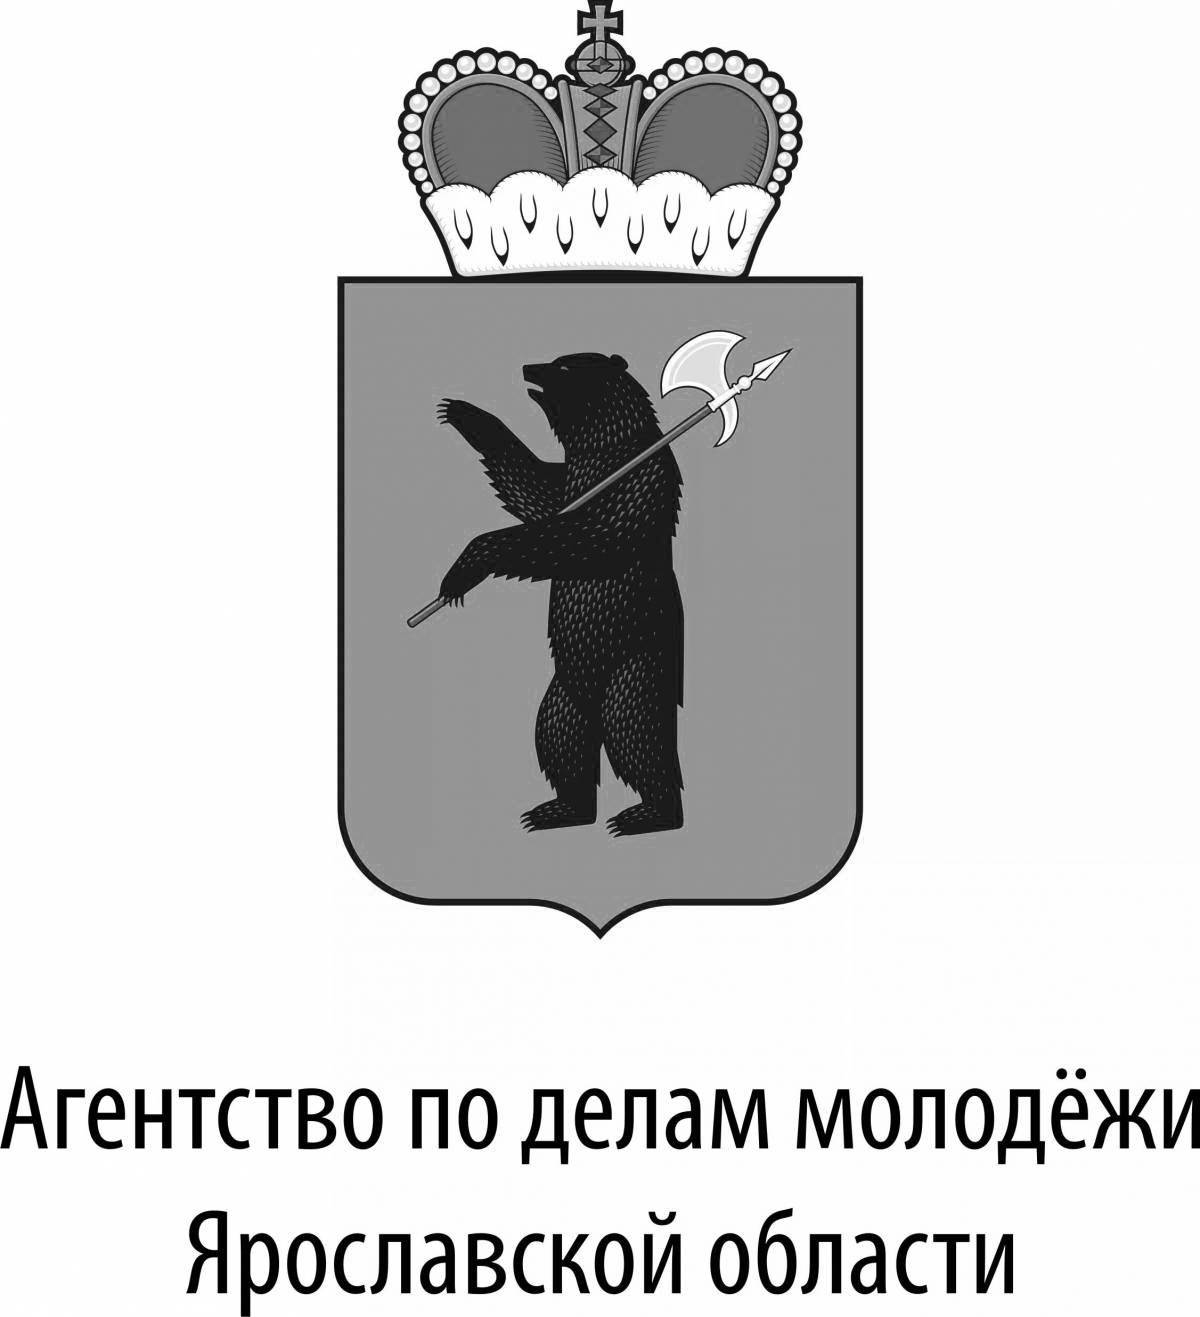 Dazzling coat of arms of Yaroslavl for children